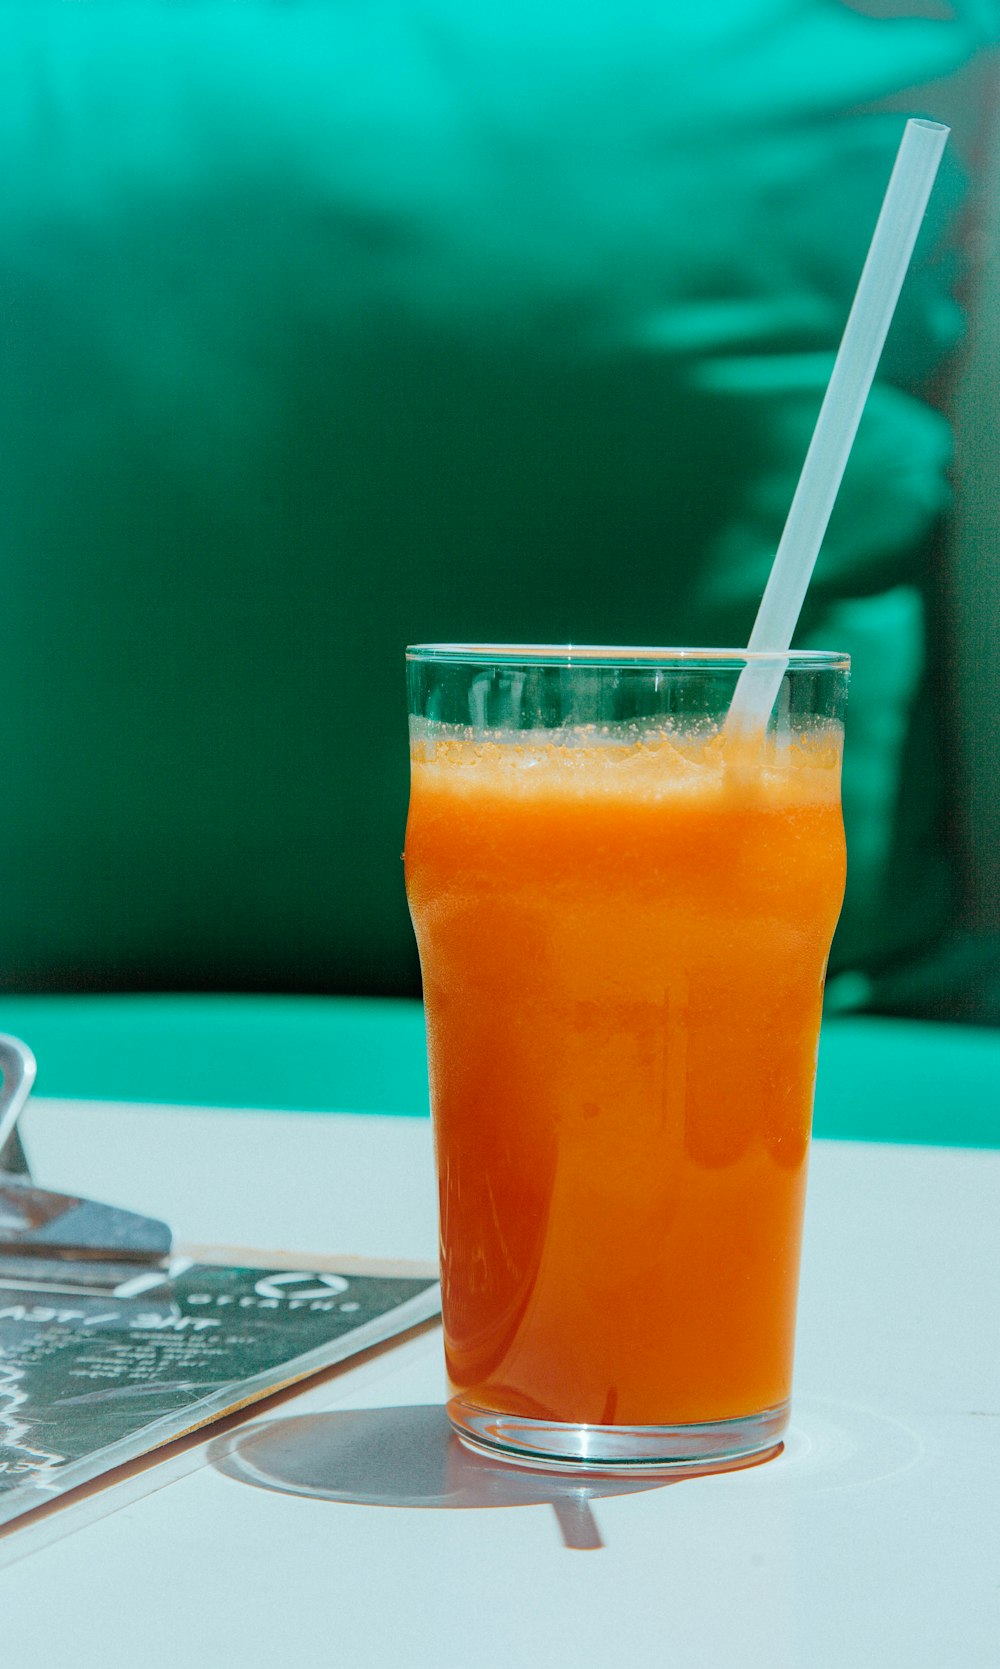 Vaso transparente con zumo de naranja